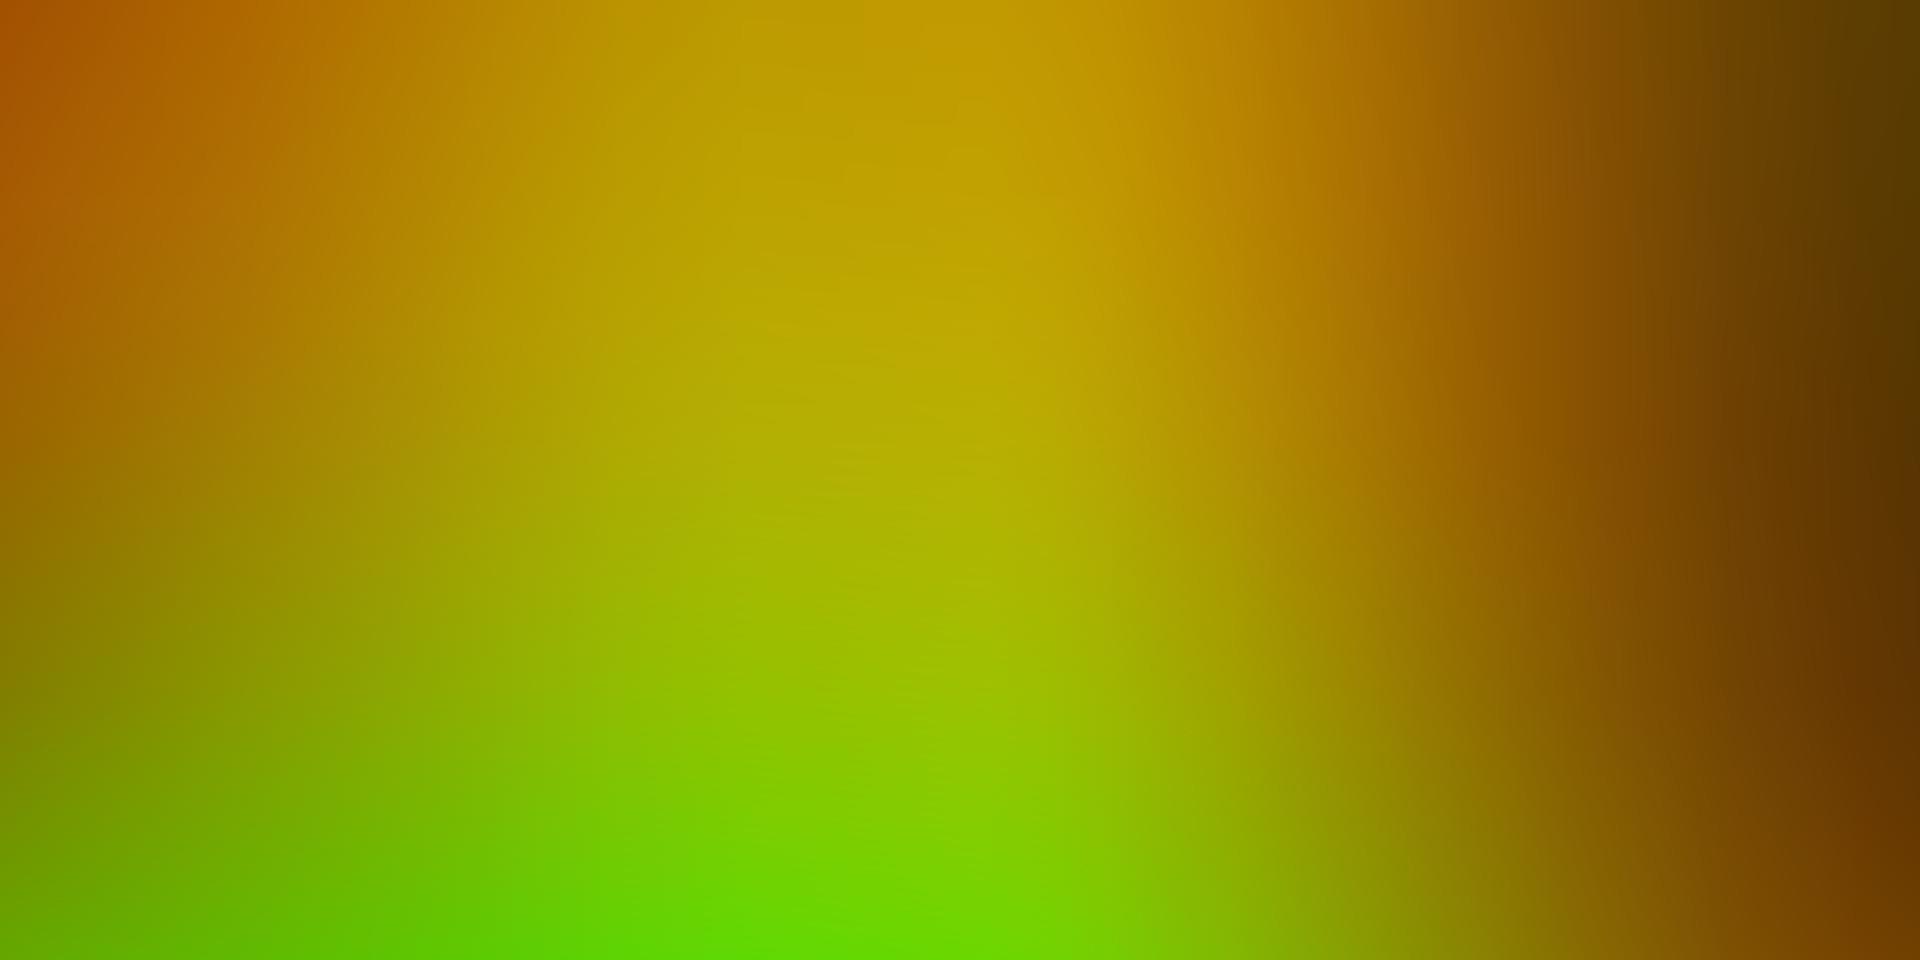 verde claro, vector amarillo fondo de colores borroso.